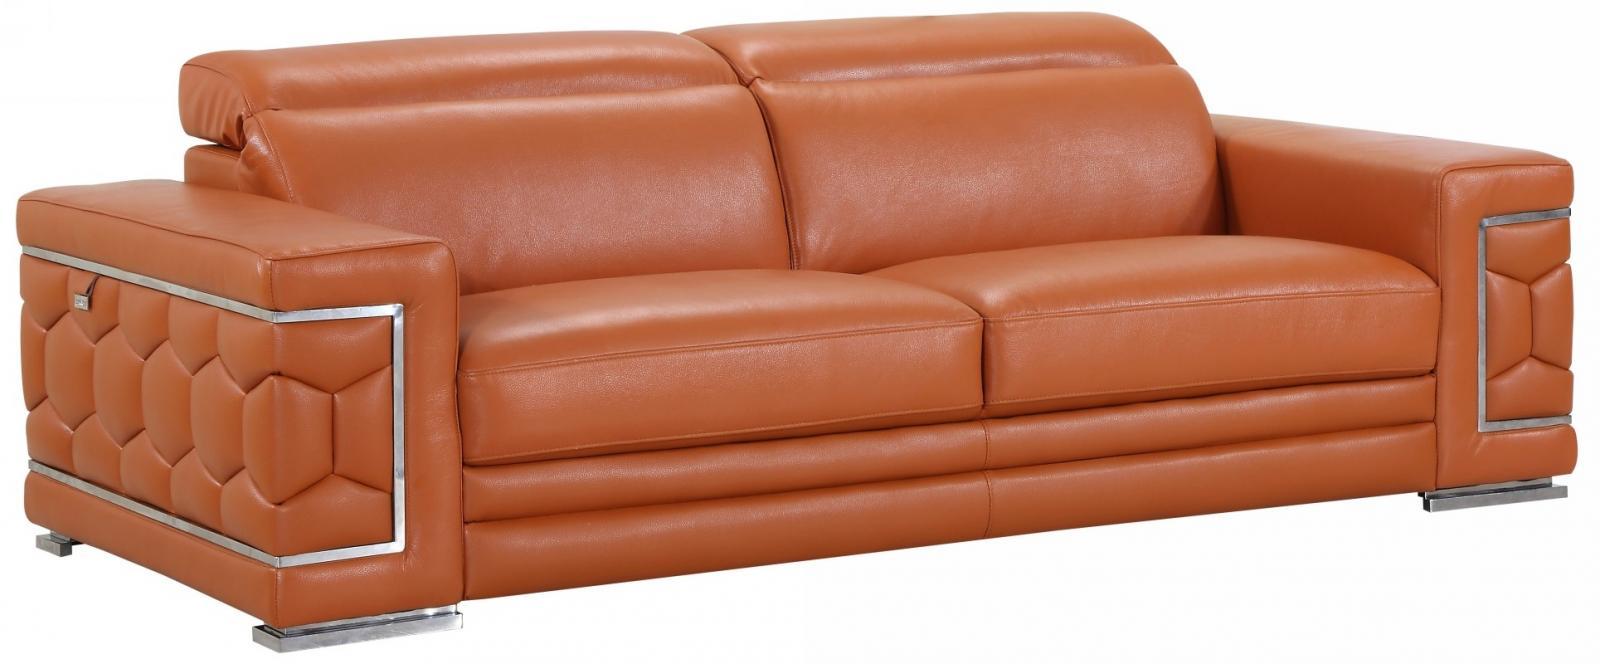 Contemporary Sofa Hawkesbury Common SKU: ORIS1503 in Camel Genuine Leather